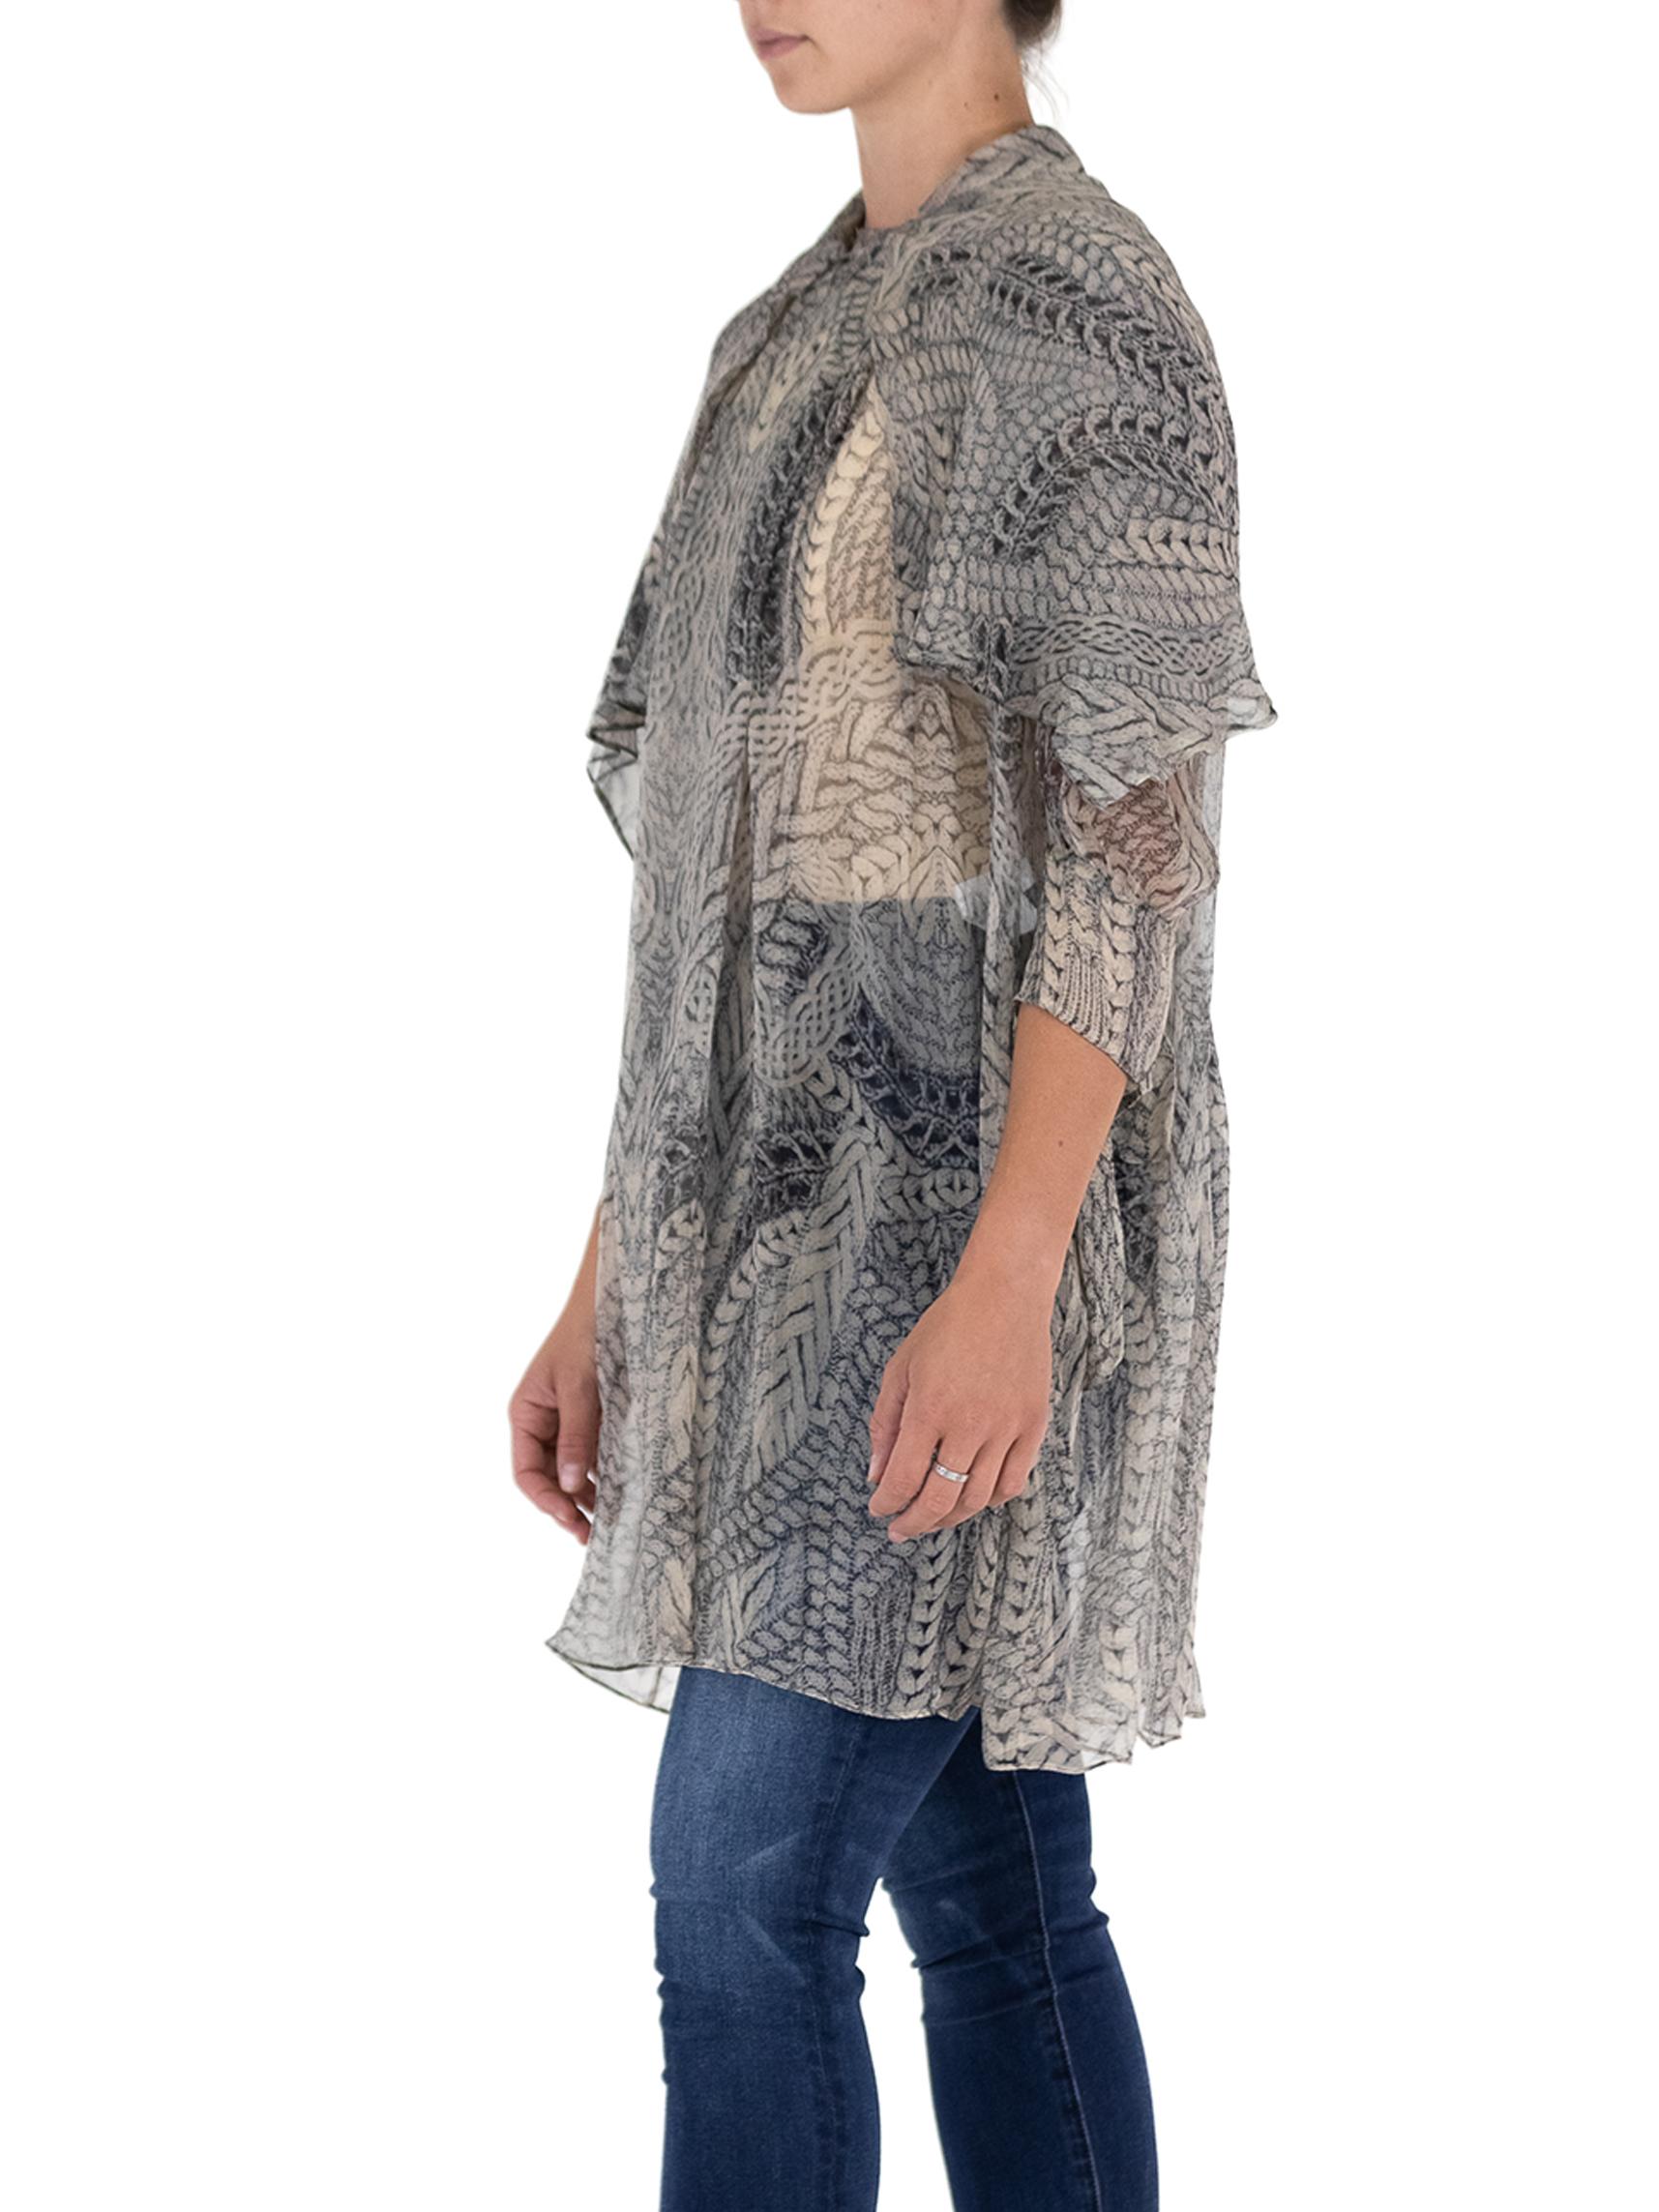 Women's 2000S ALEXANDER MCQUEEN Gray & Navy Silk Chiffon Knit Print Blouse For Sale